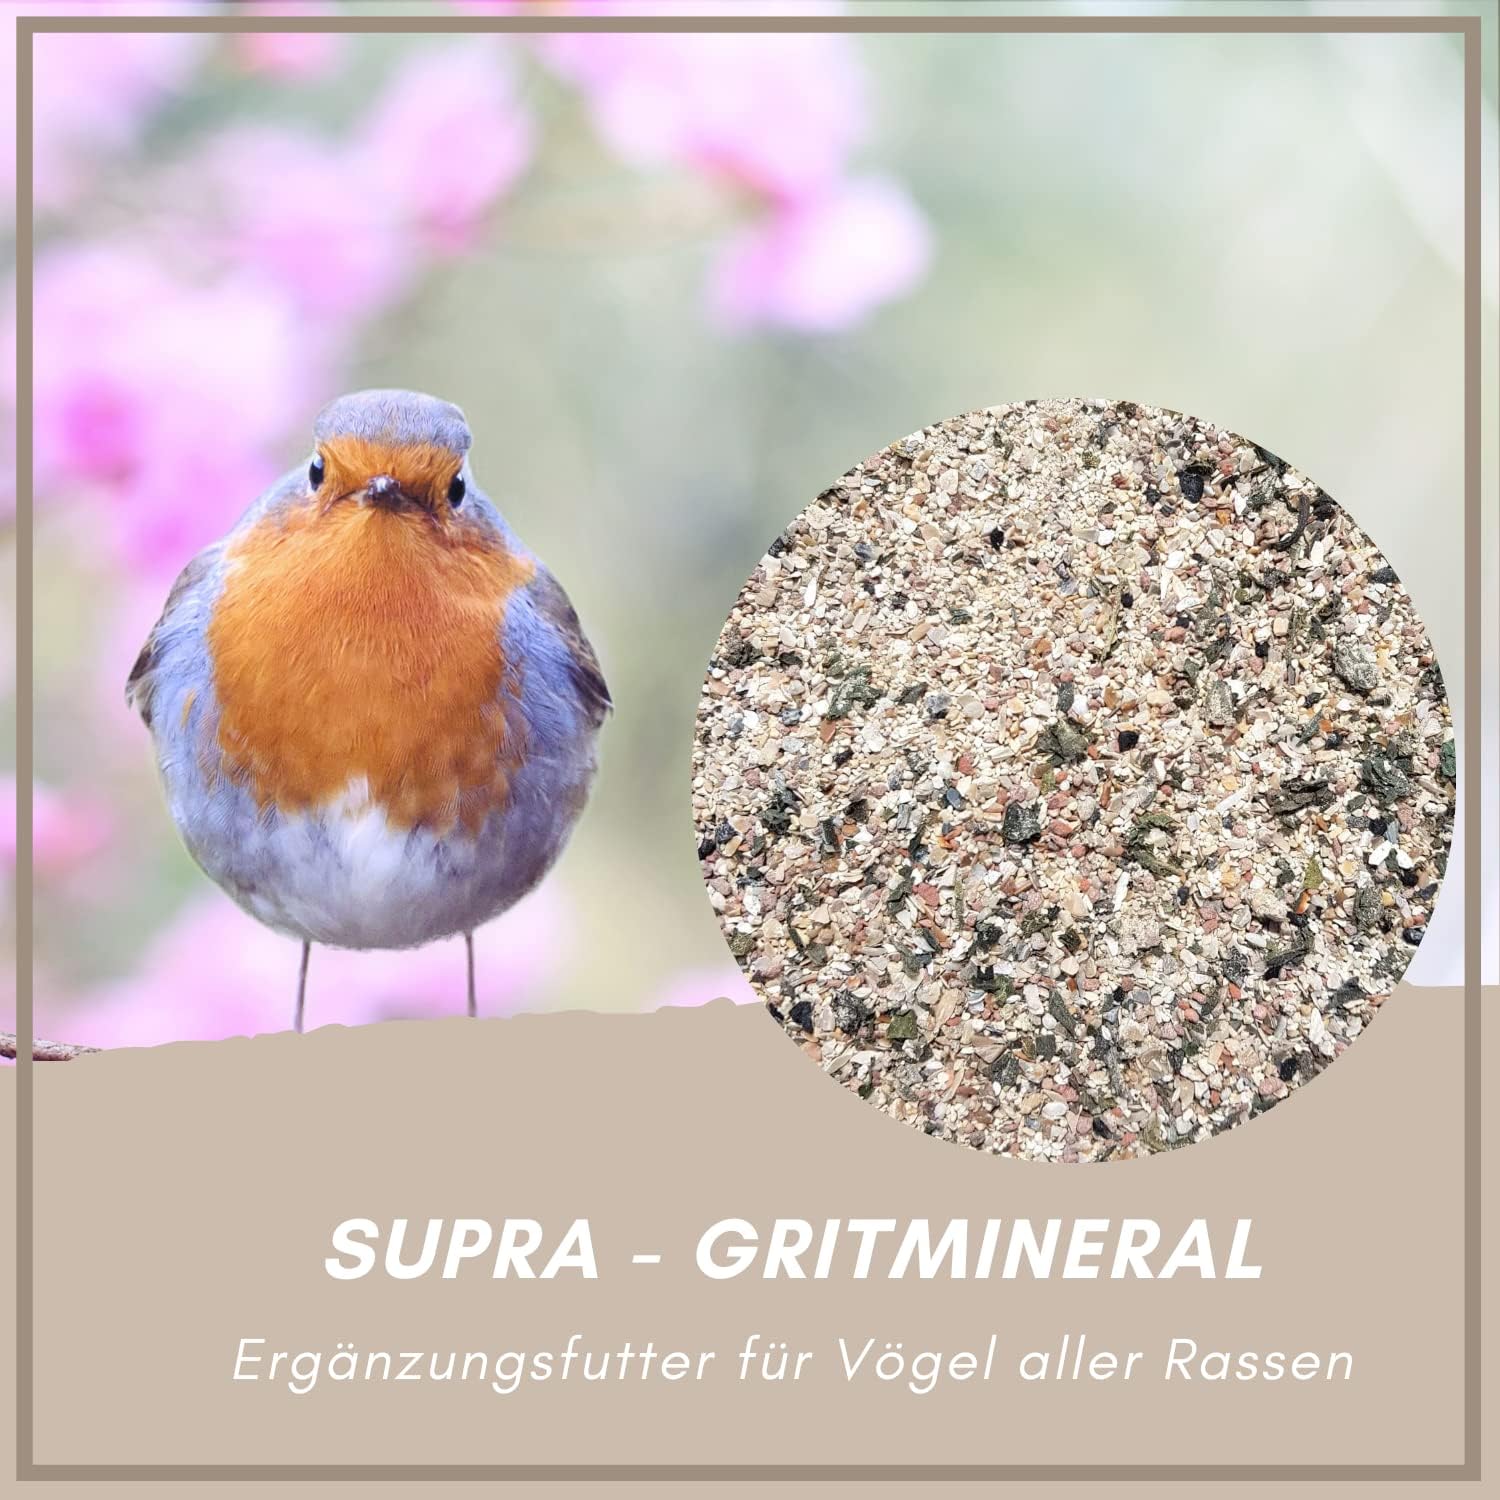 Supravit Supra-Gritmineral 250g Vogelgrit, Ergänzungsfutter für Vögel